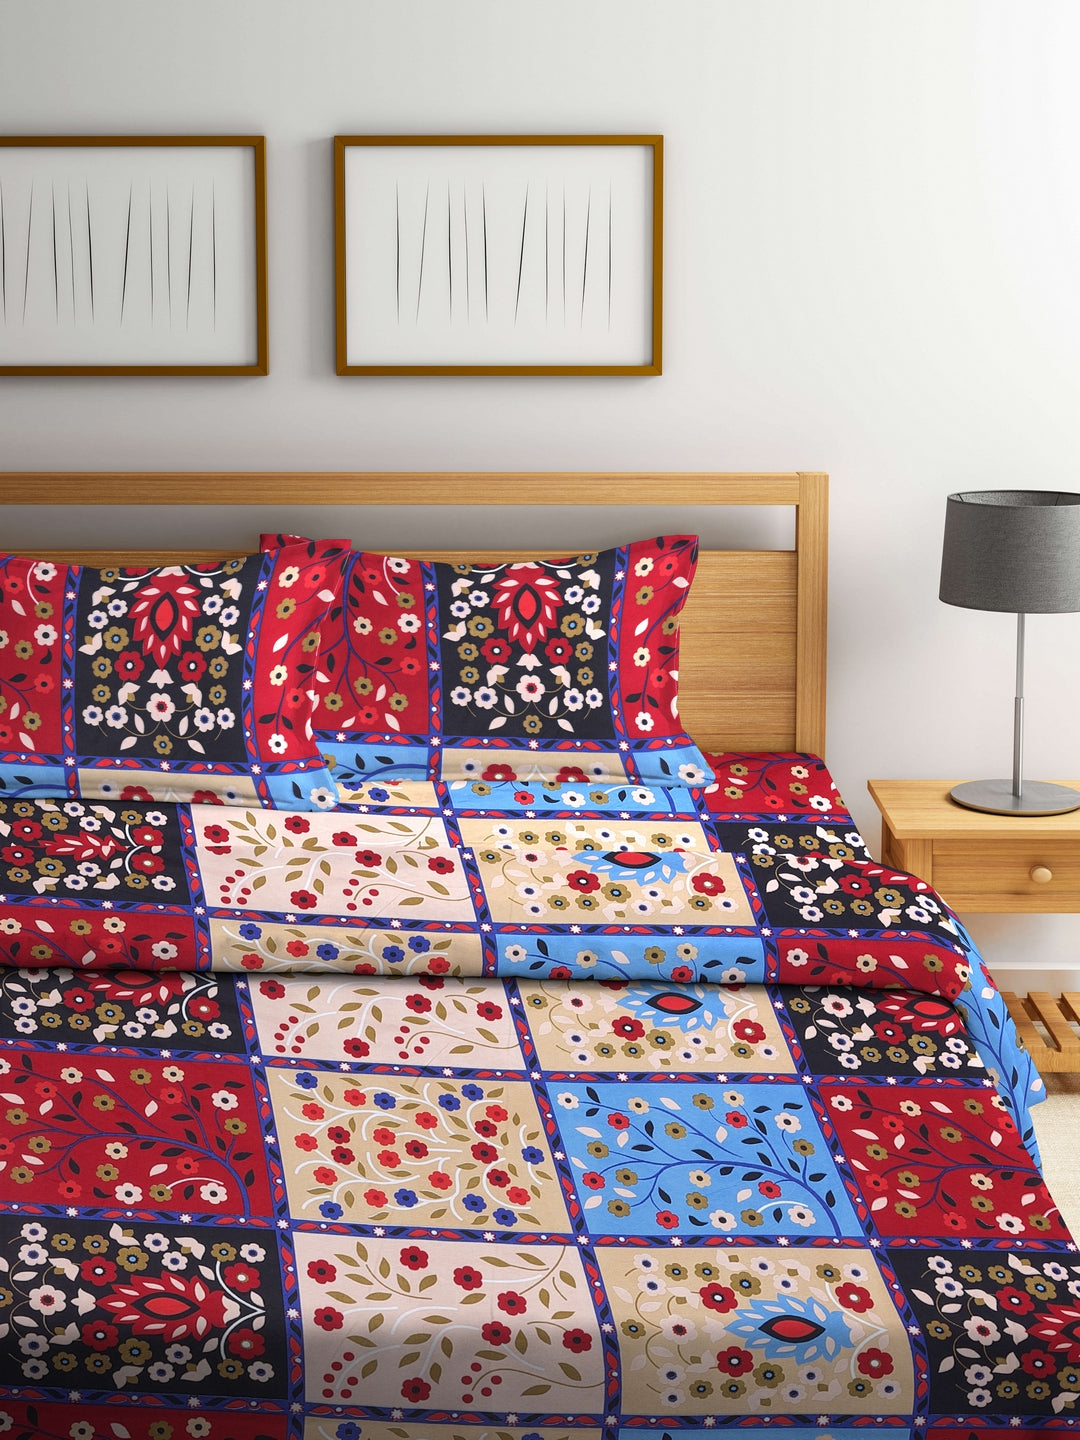 Arrabi Multi Floral TC Cotton Blend Double Size Comforter Bedding Set with 2 Pillow Cover